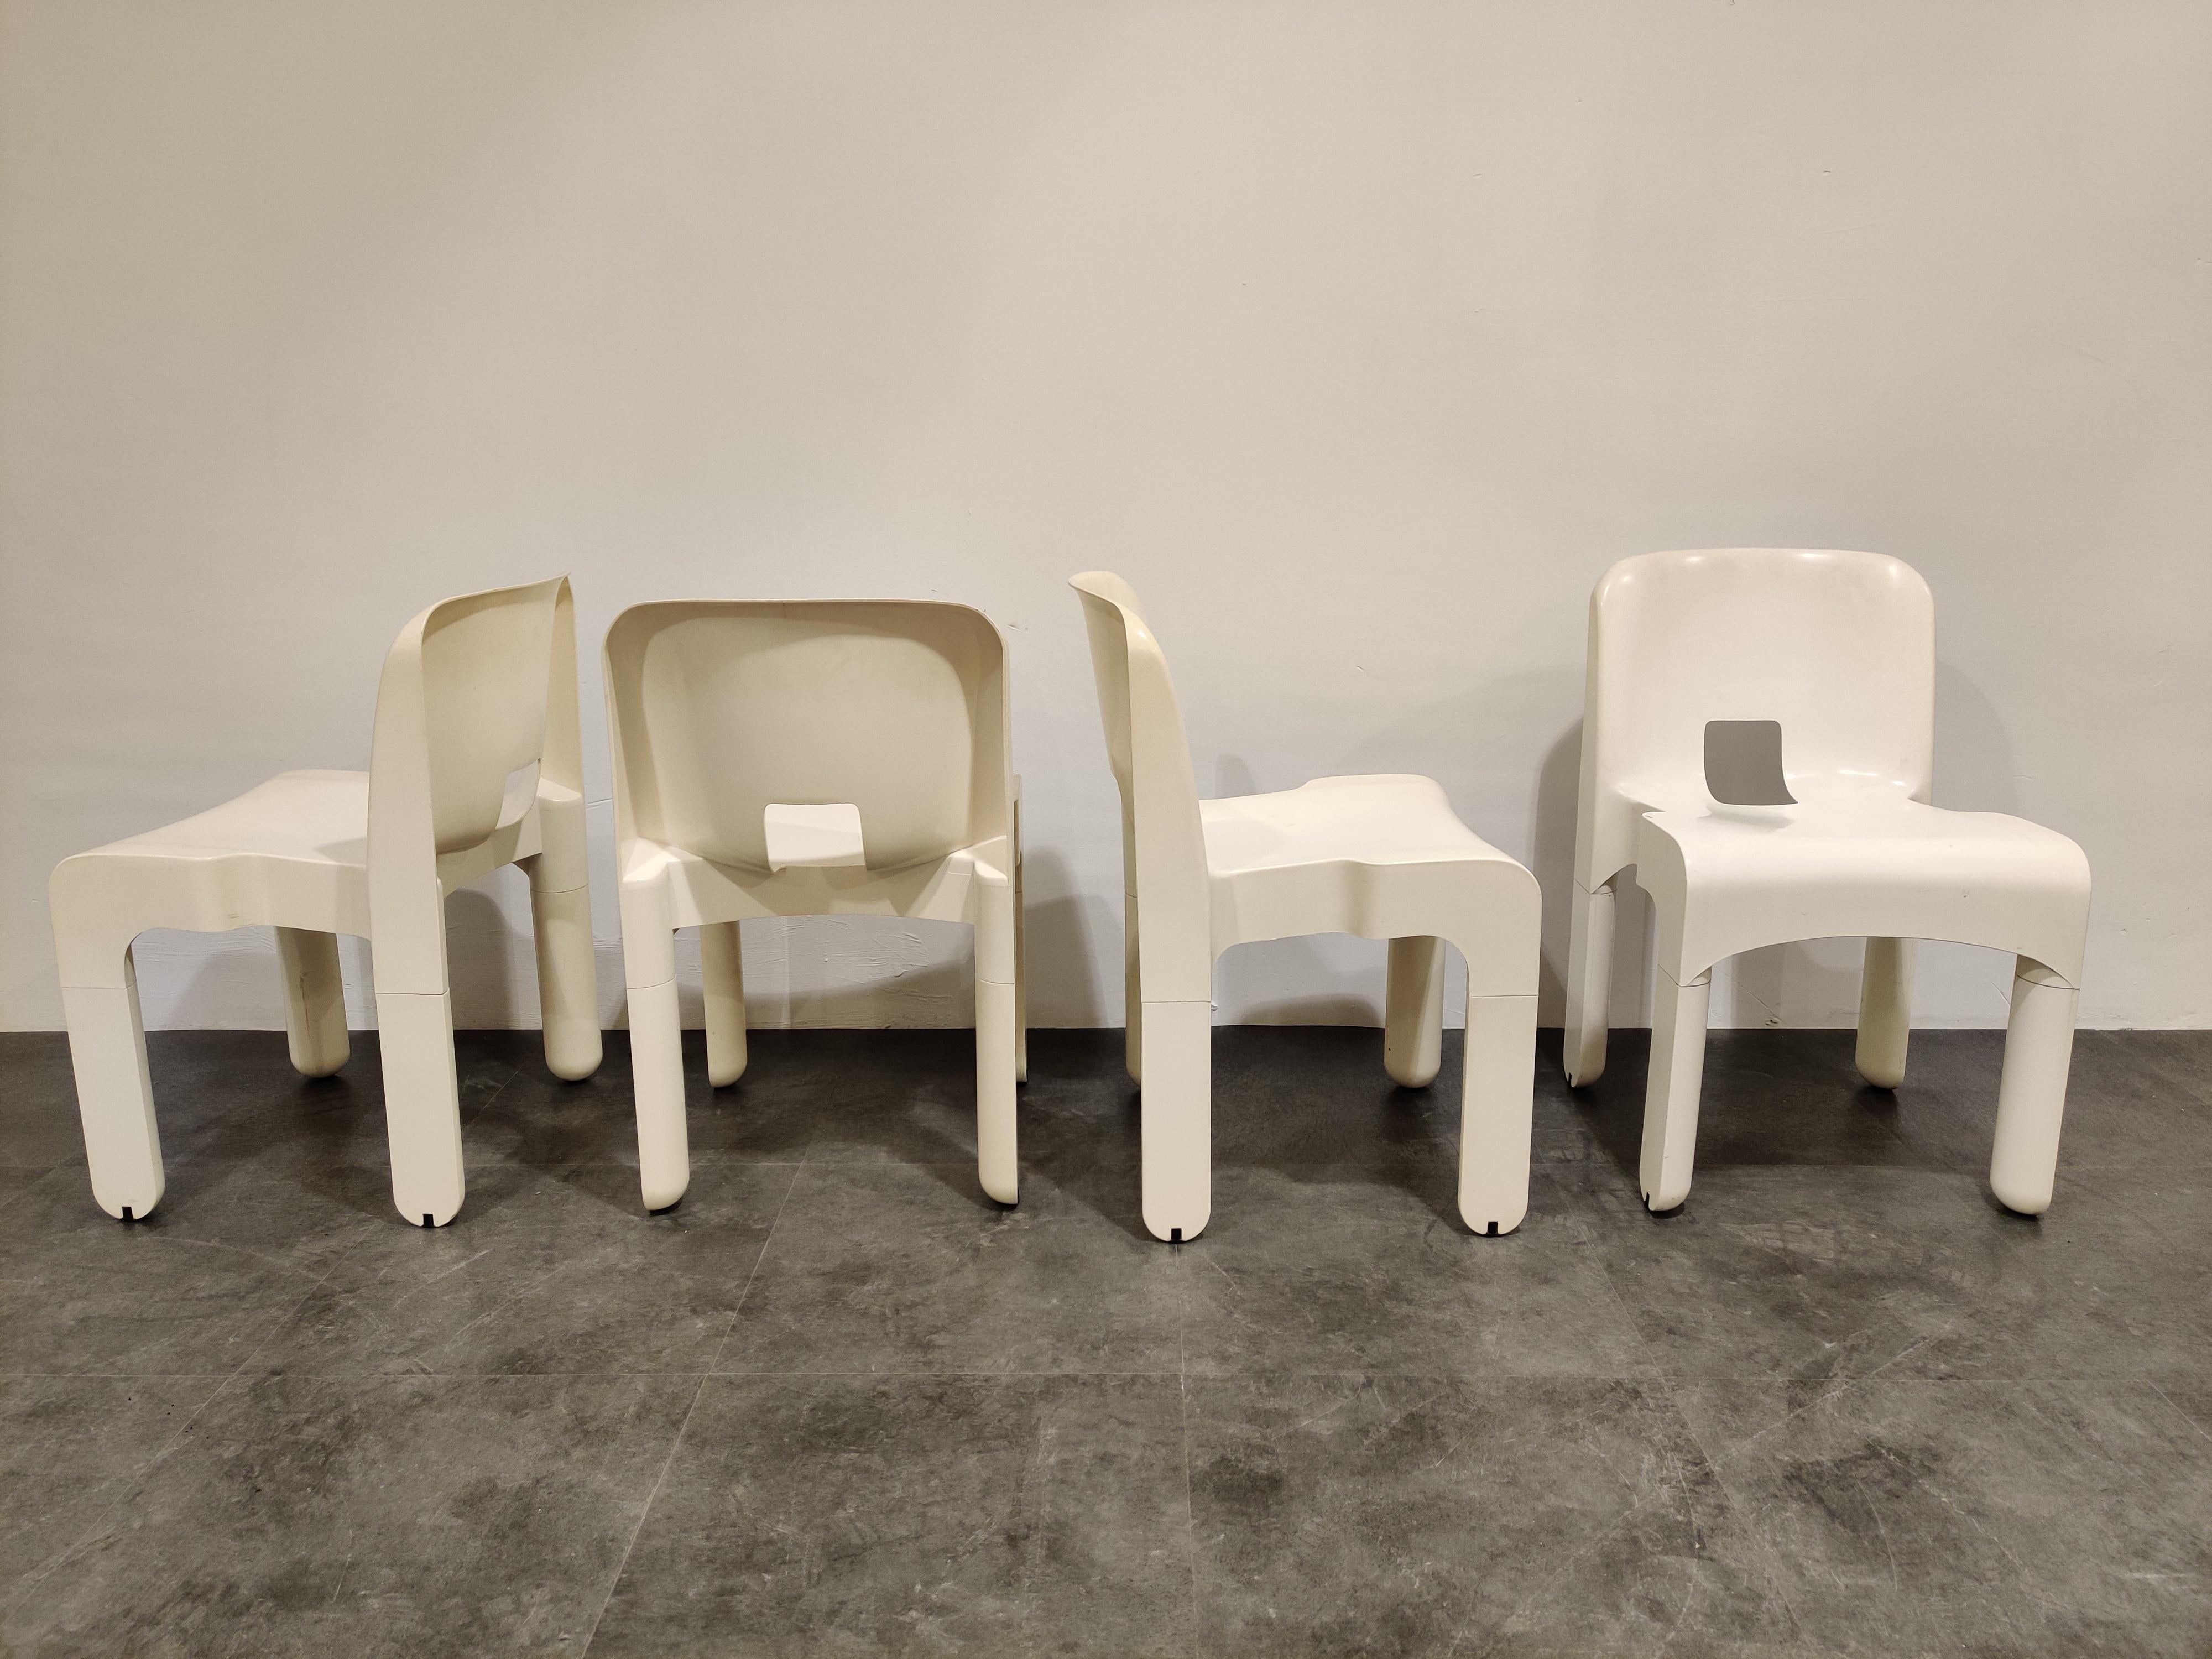 Italian Universal Plastic Chairs Model 4869 by Joe Colombo for Kartell